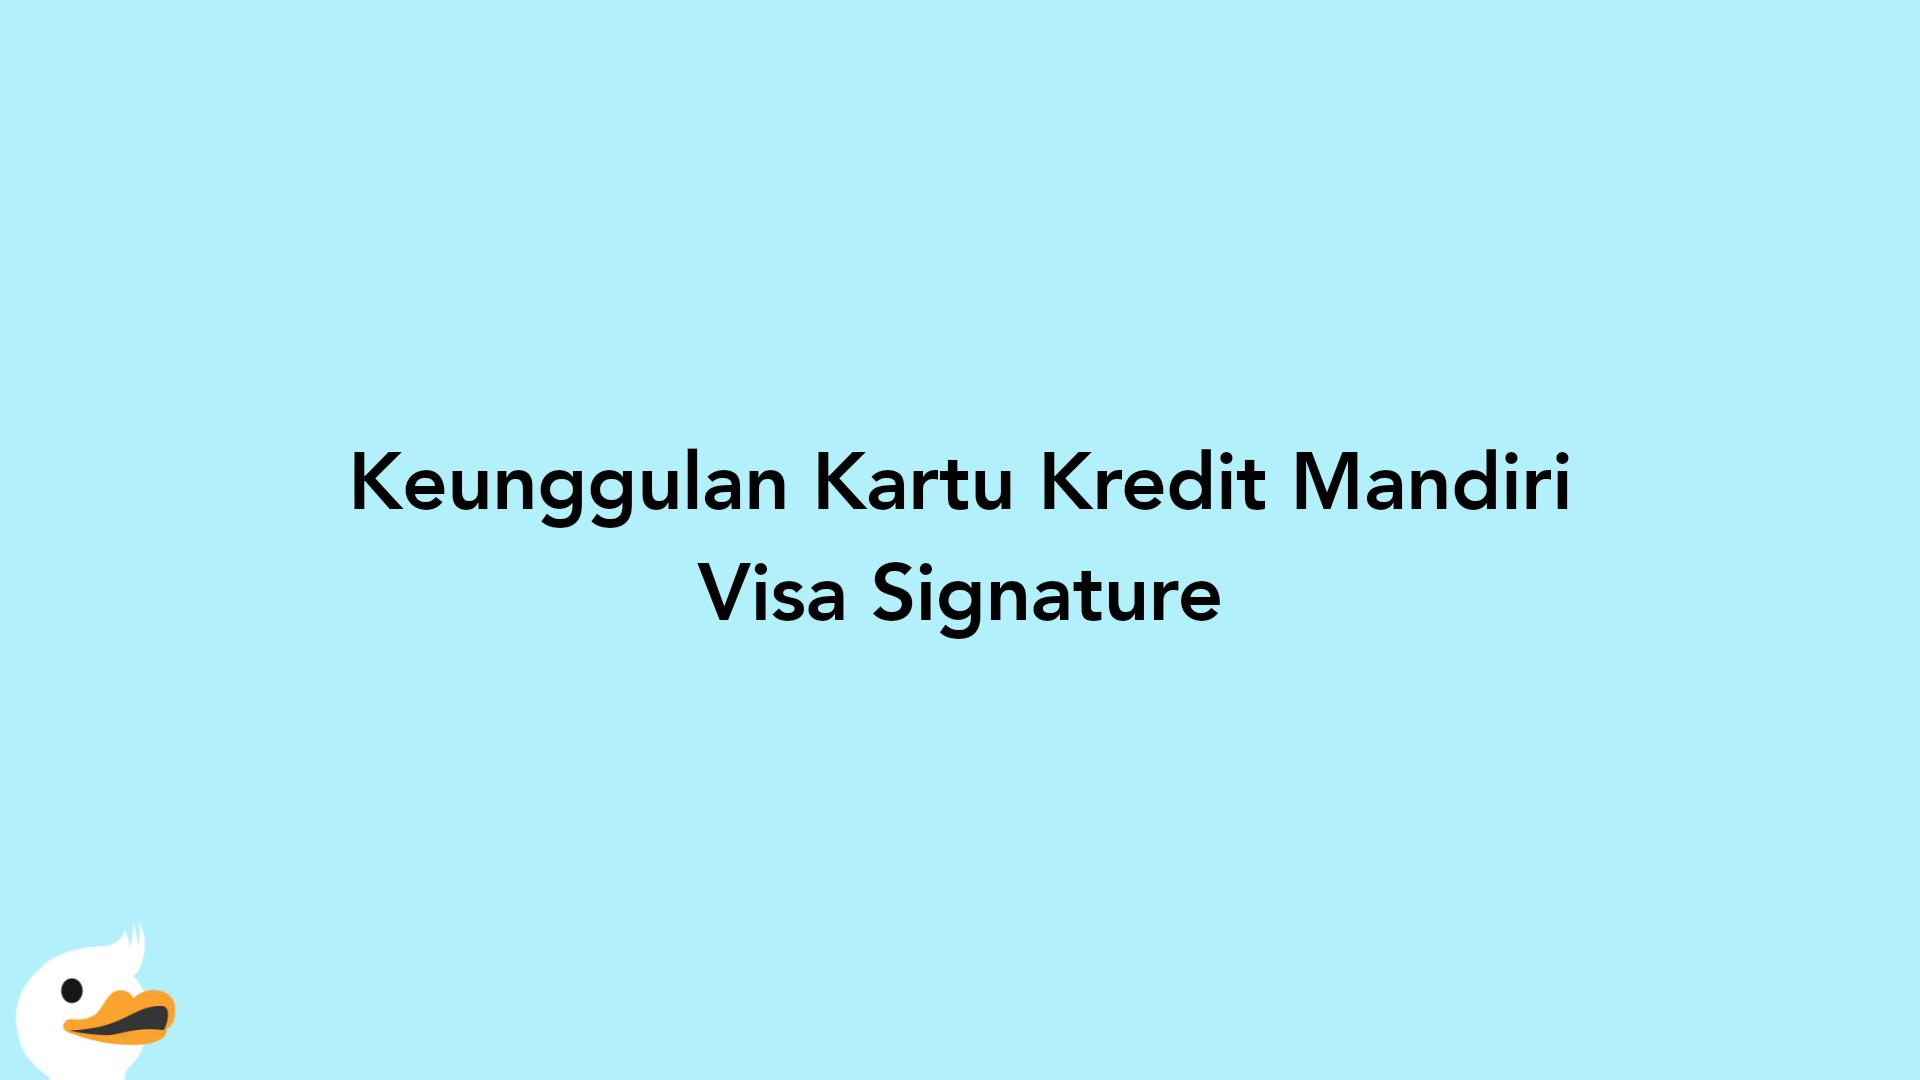 Keunggulan Kartu Kredit Mandiri Visa Signature